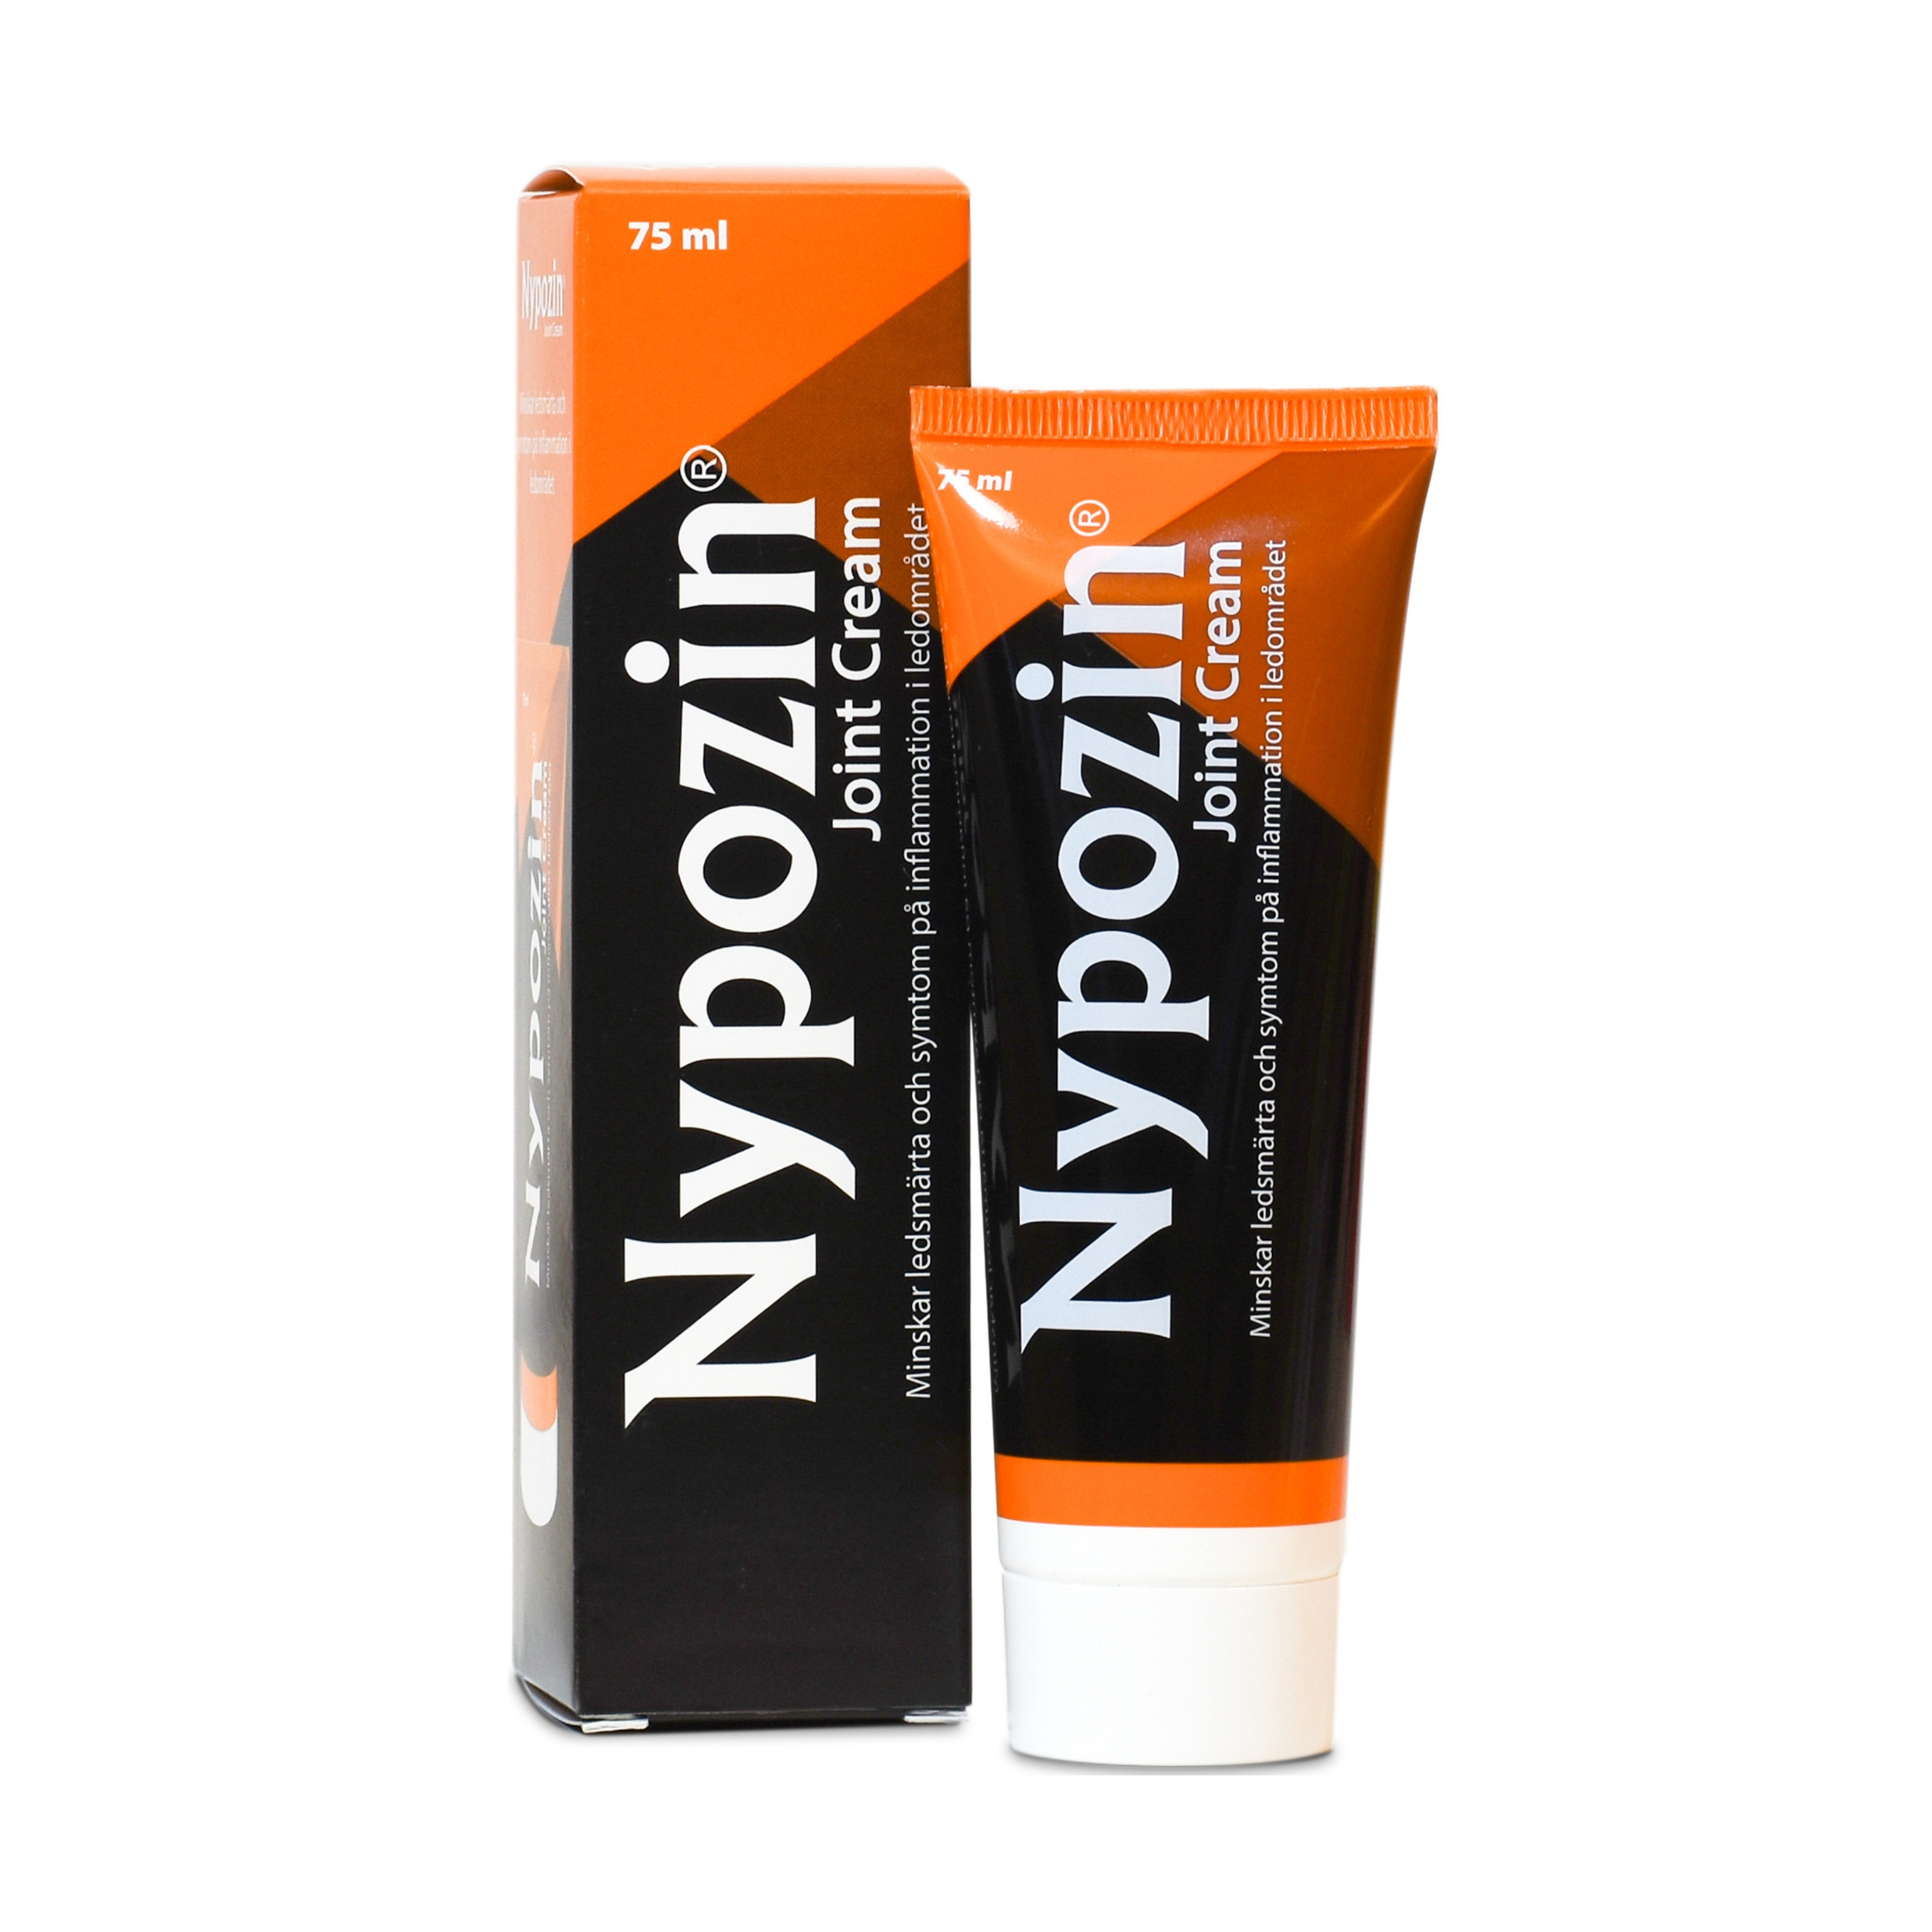 Nypozin Joint Cream 75ml